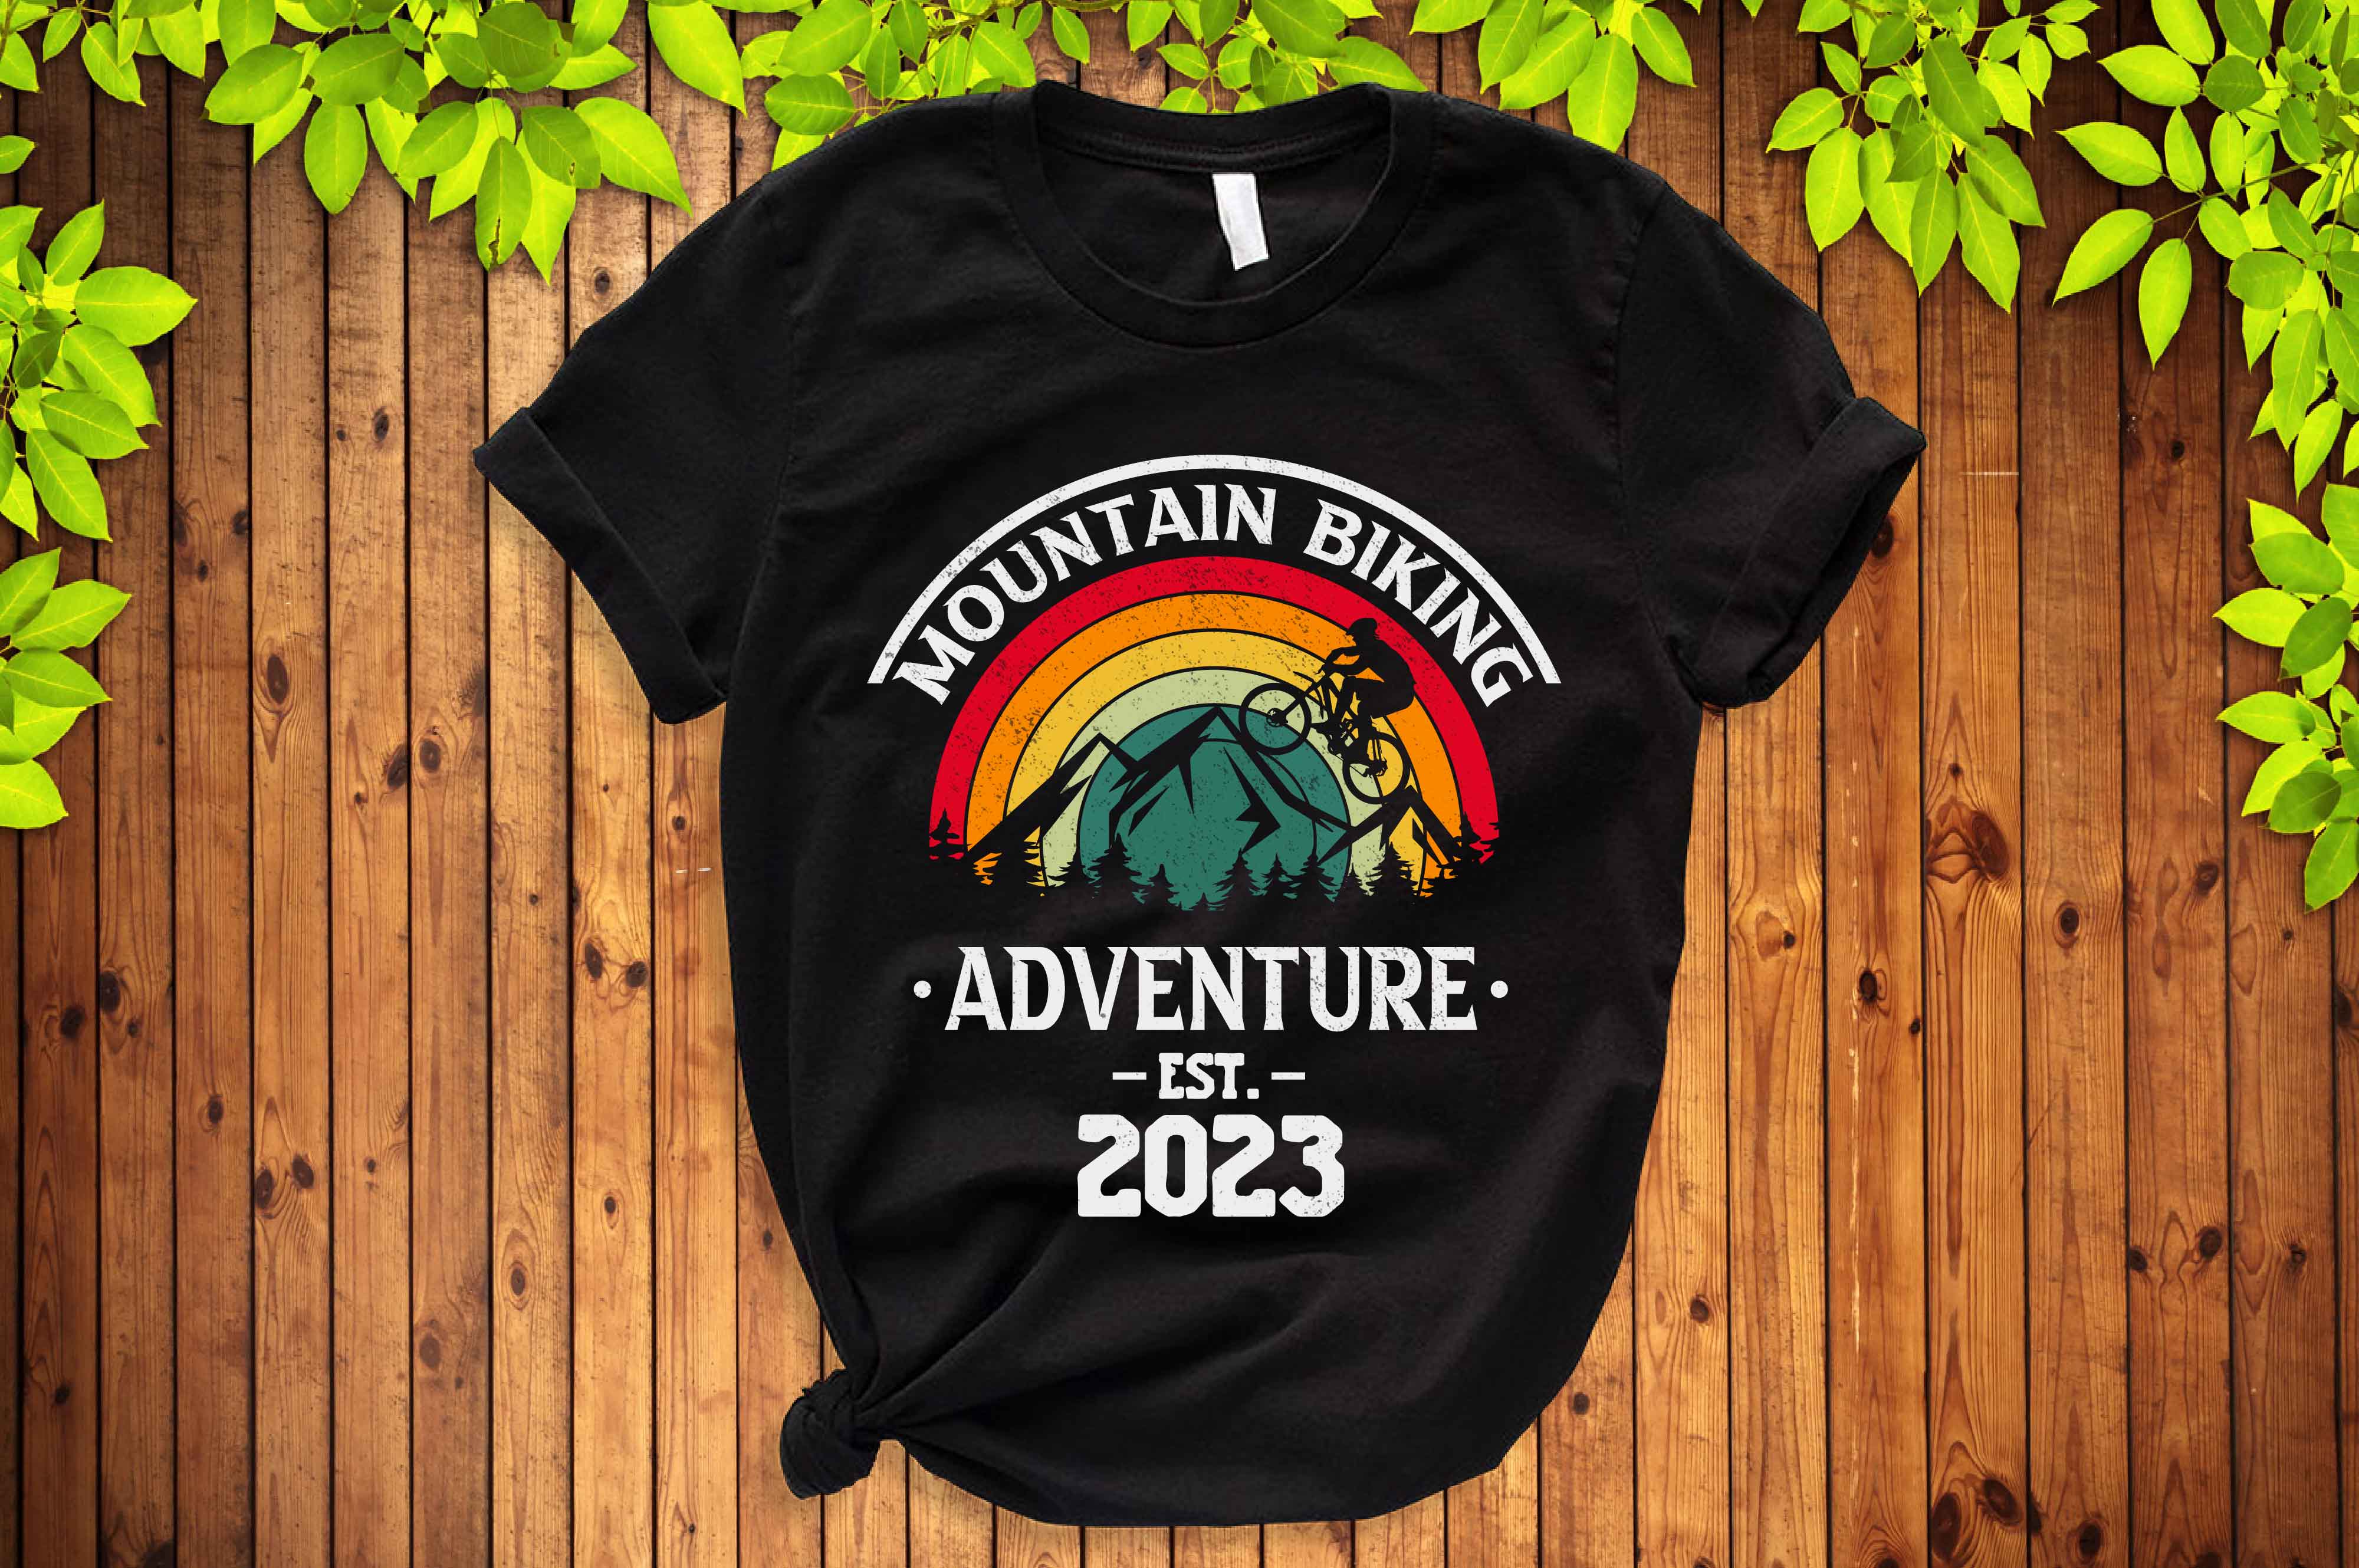 Black mountain biking adventure t - shirt on a wooden background.